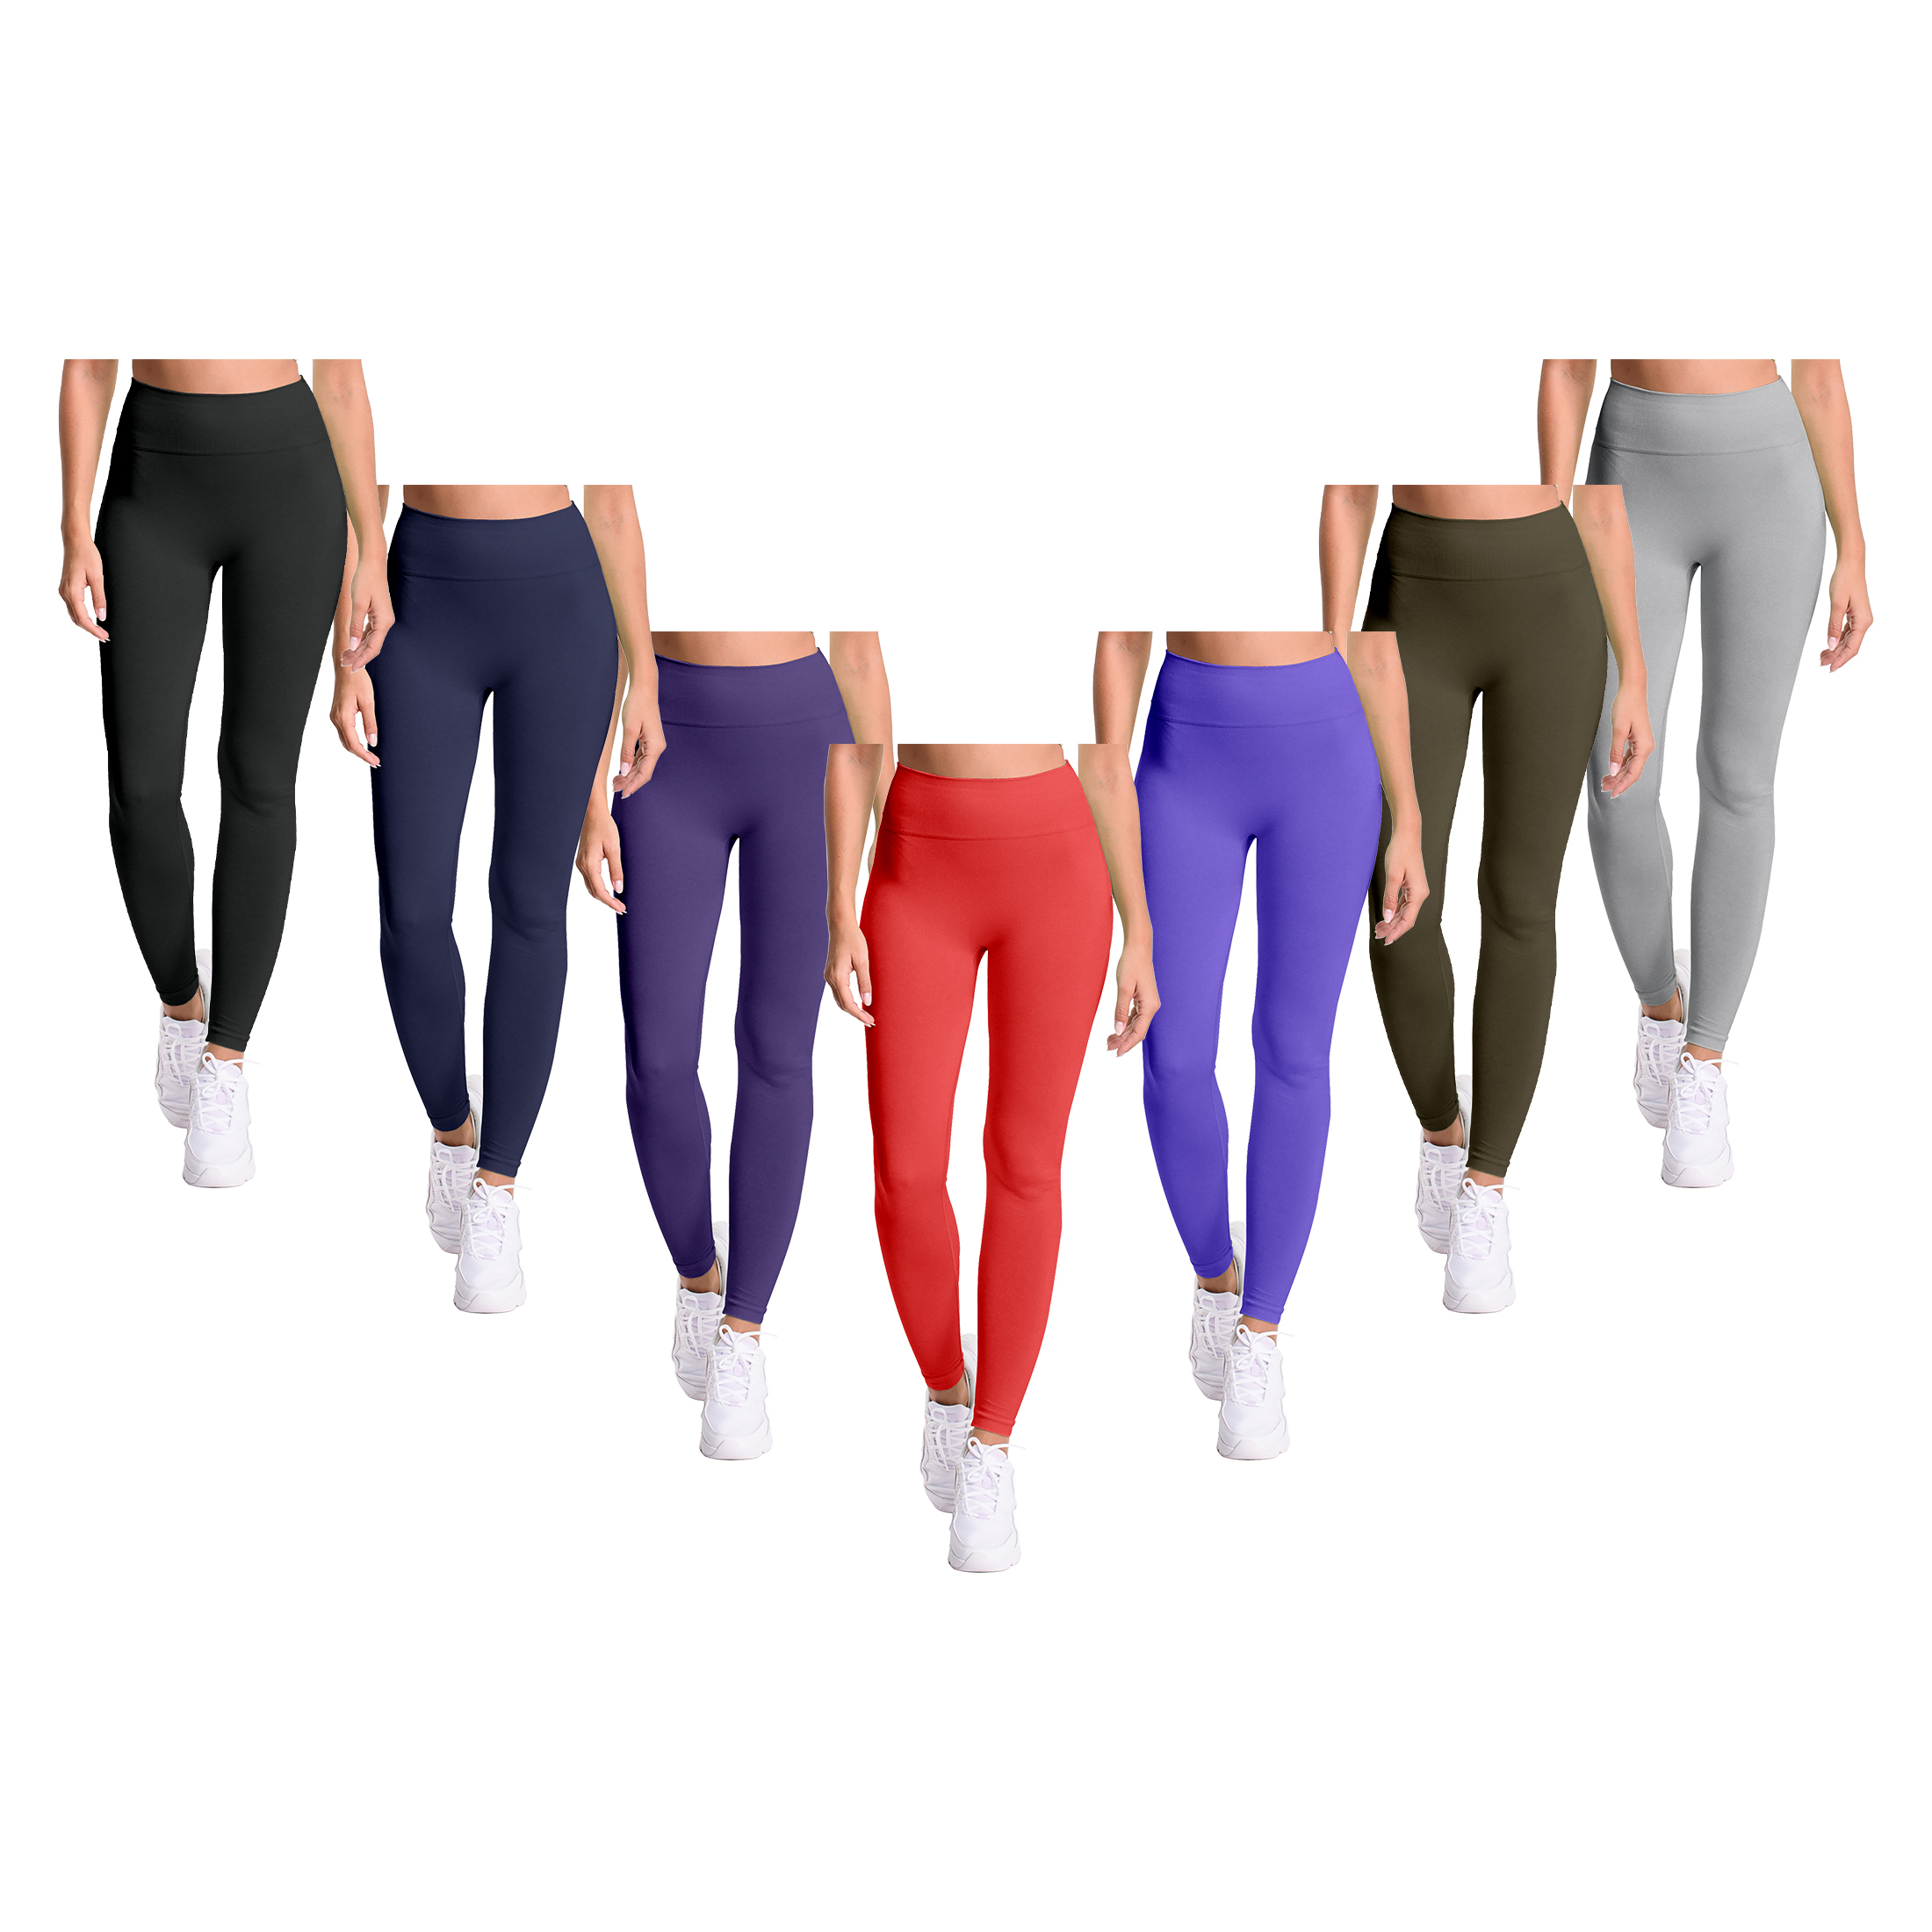 3-Pack: Women's Cozy Fleece-Lined Workout Yoga Pants Seamless Leggings - X-Large